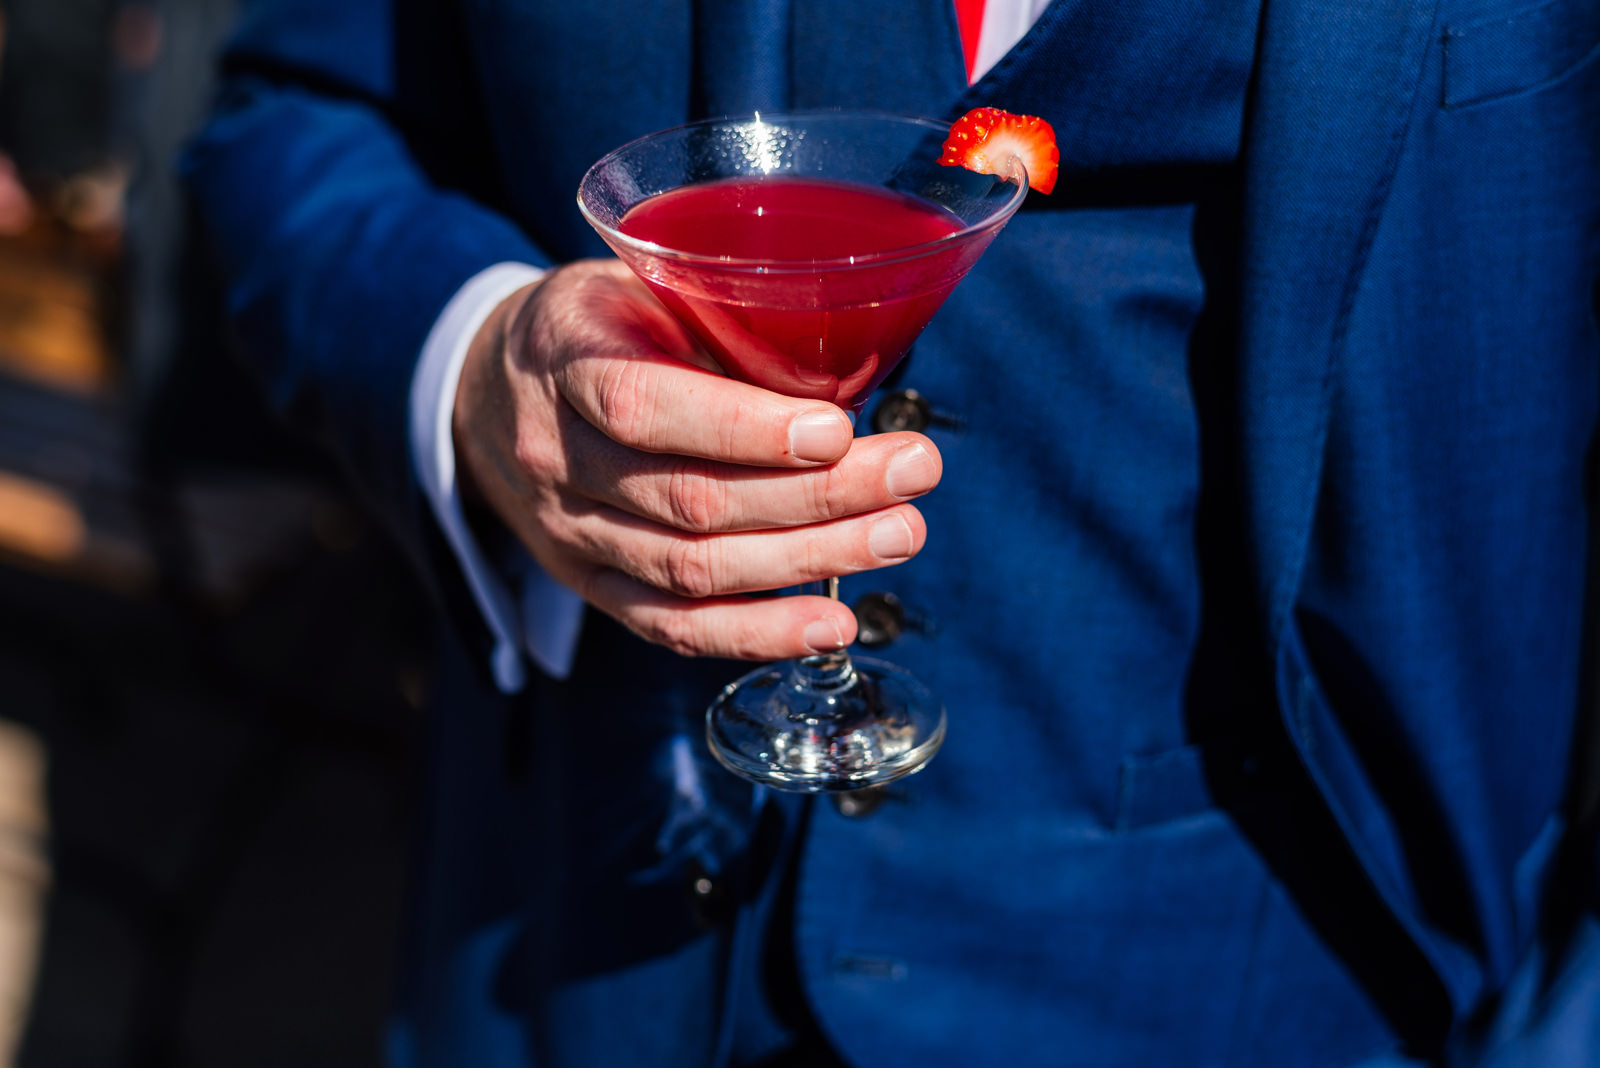 wedding cocktails at drinks reception